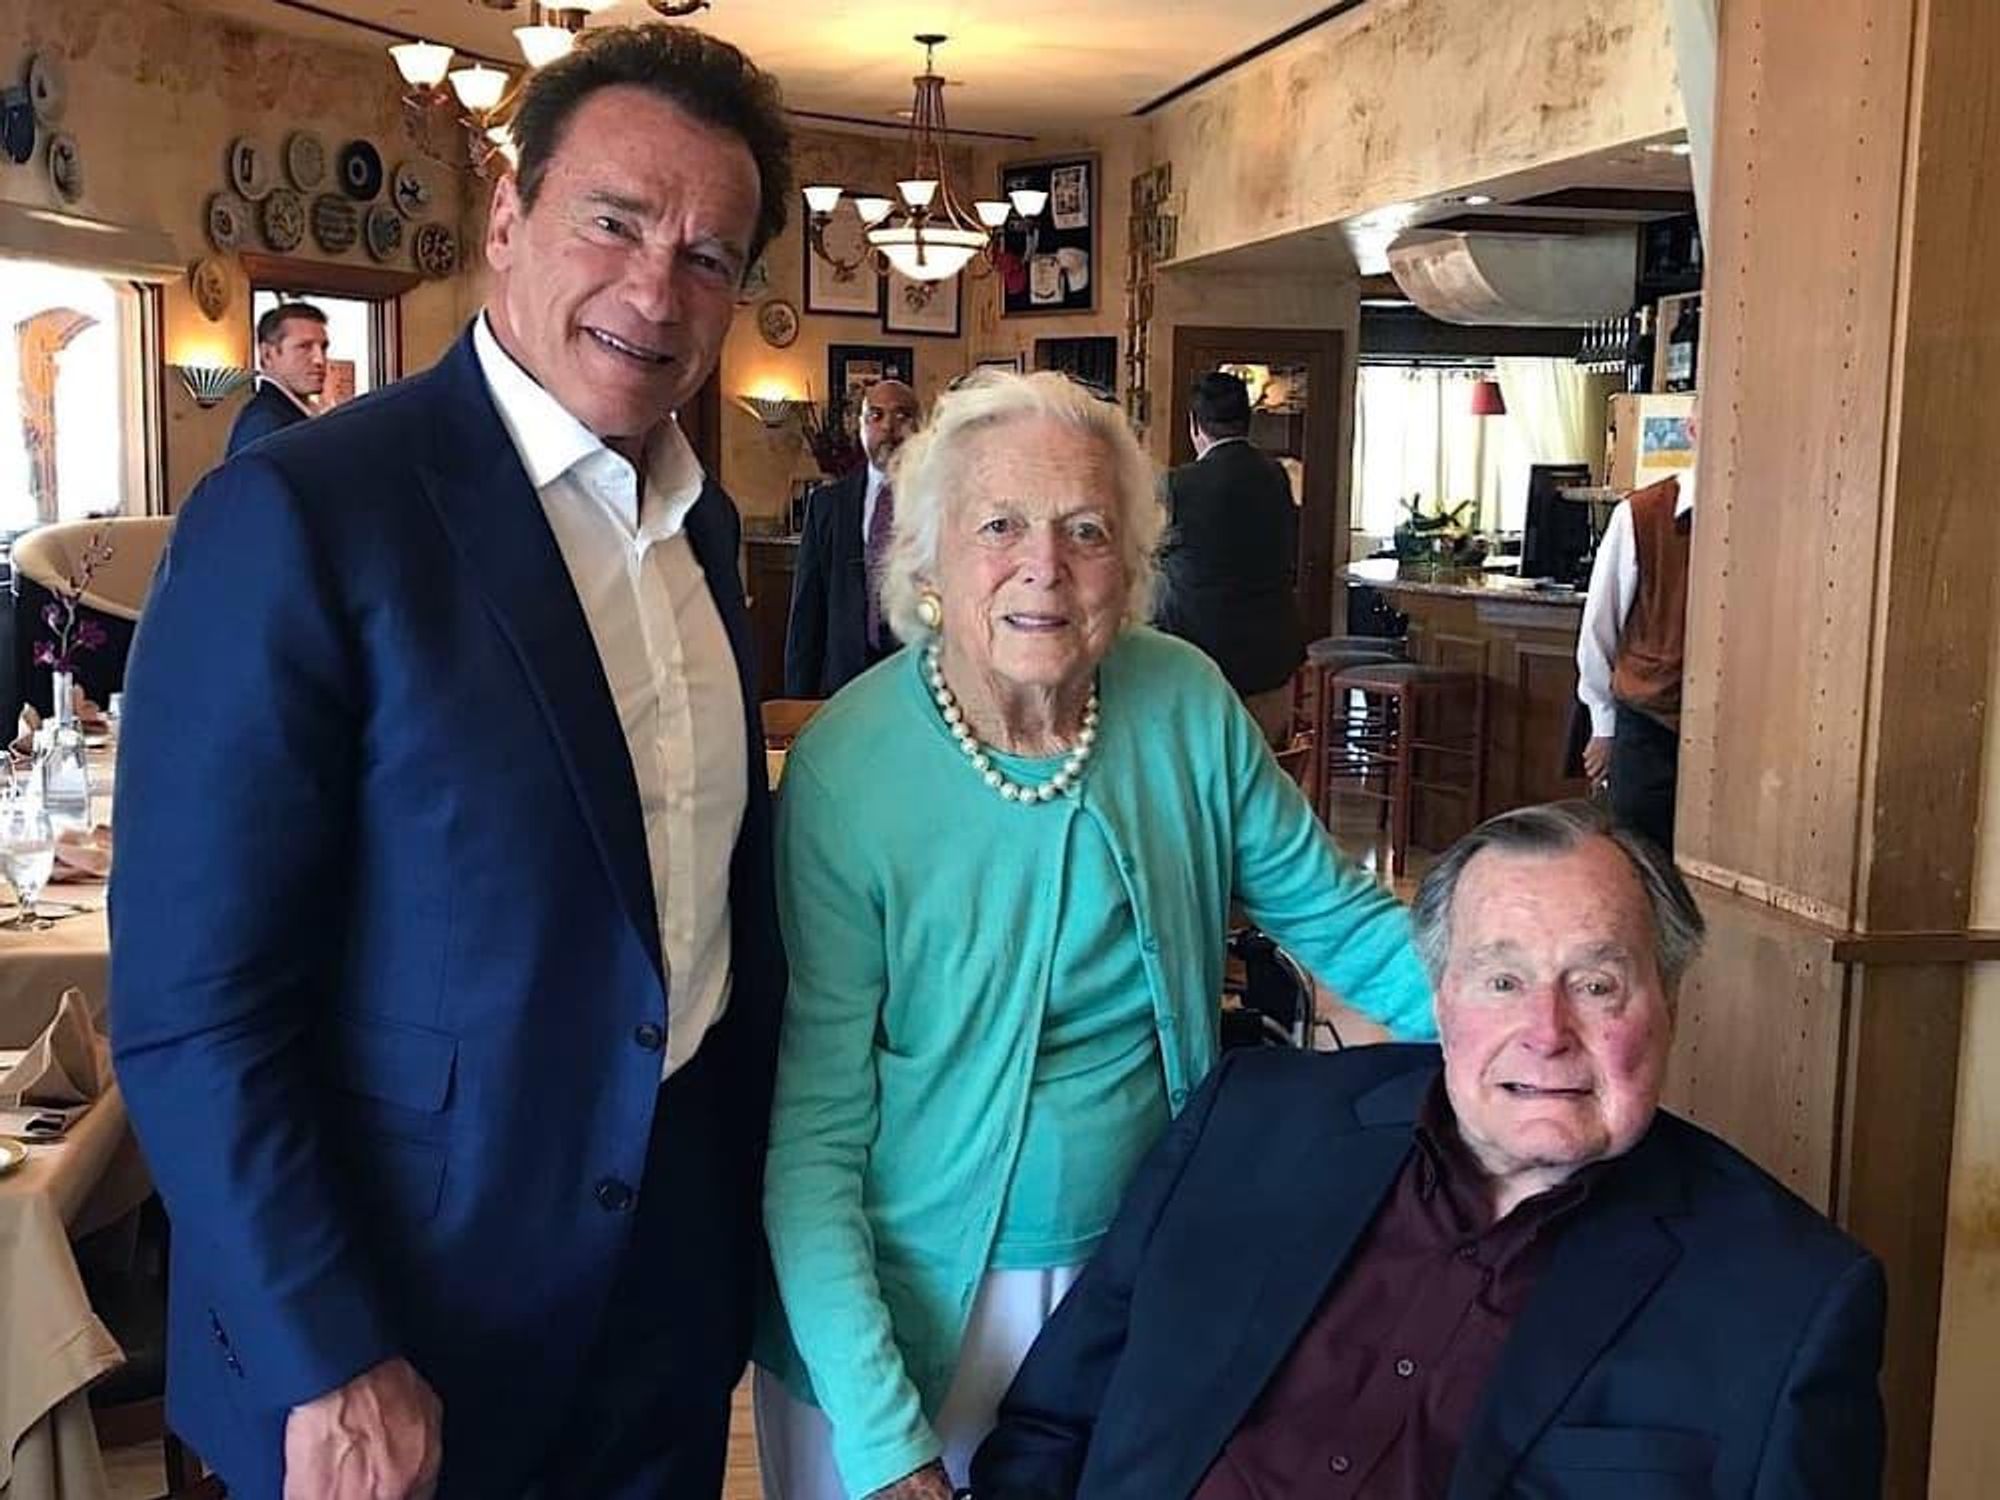 Houston_Marcy_Arnold Schwarzenegger, with George and Barbara Bush at Arcodoro